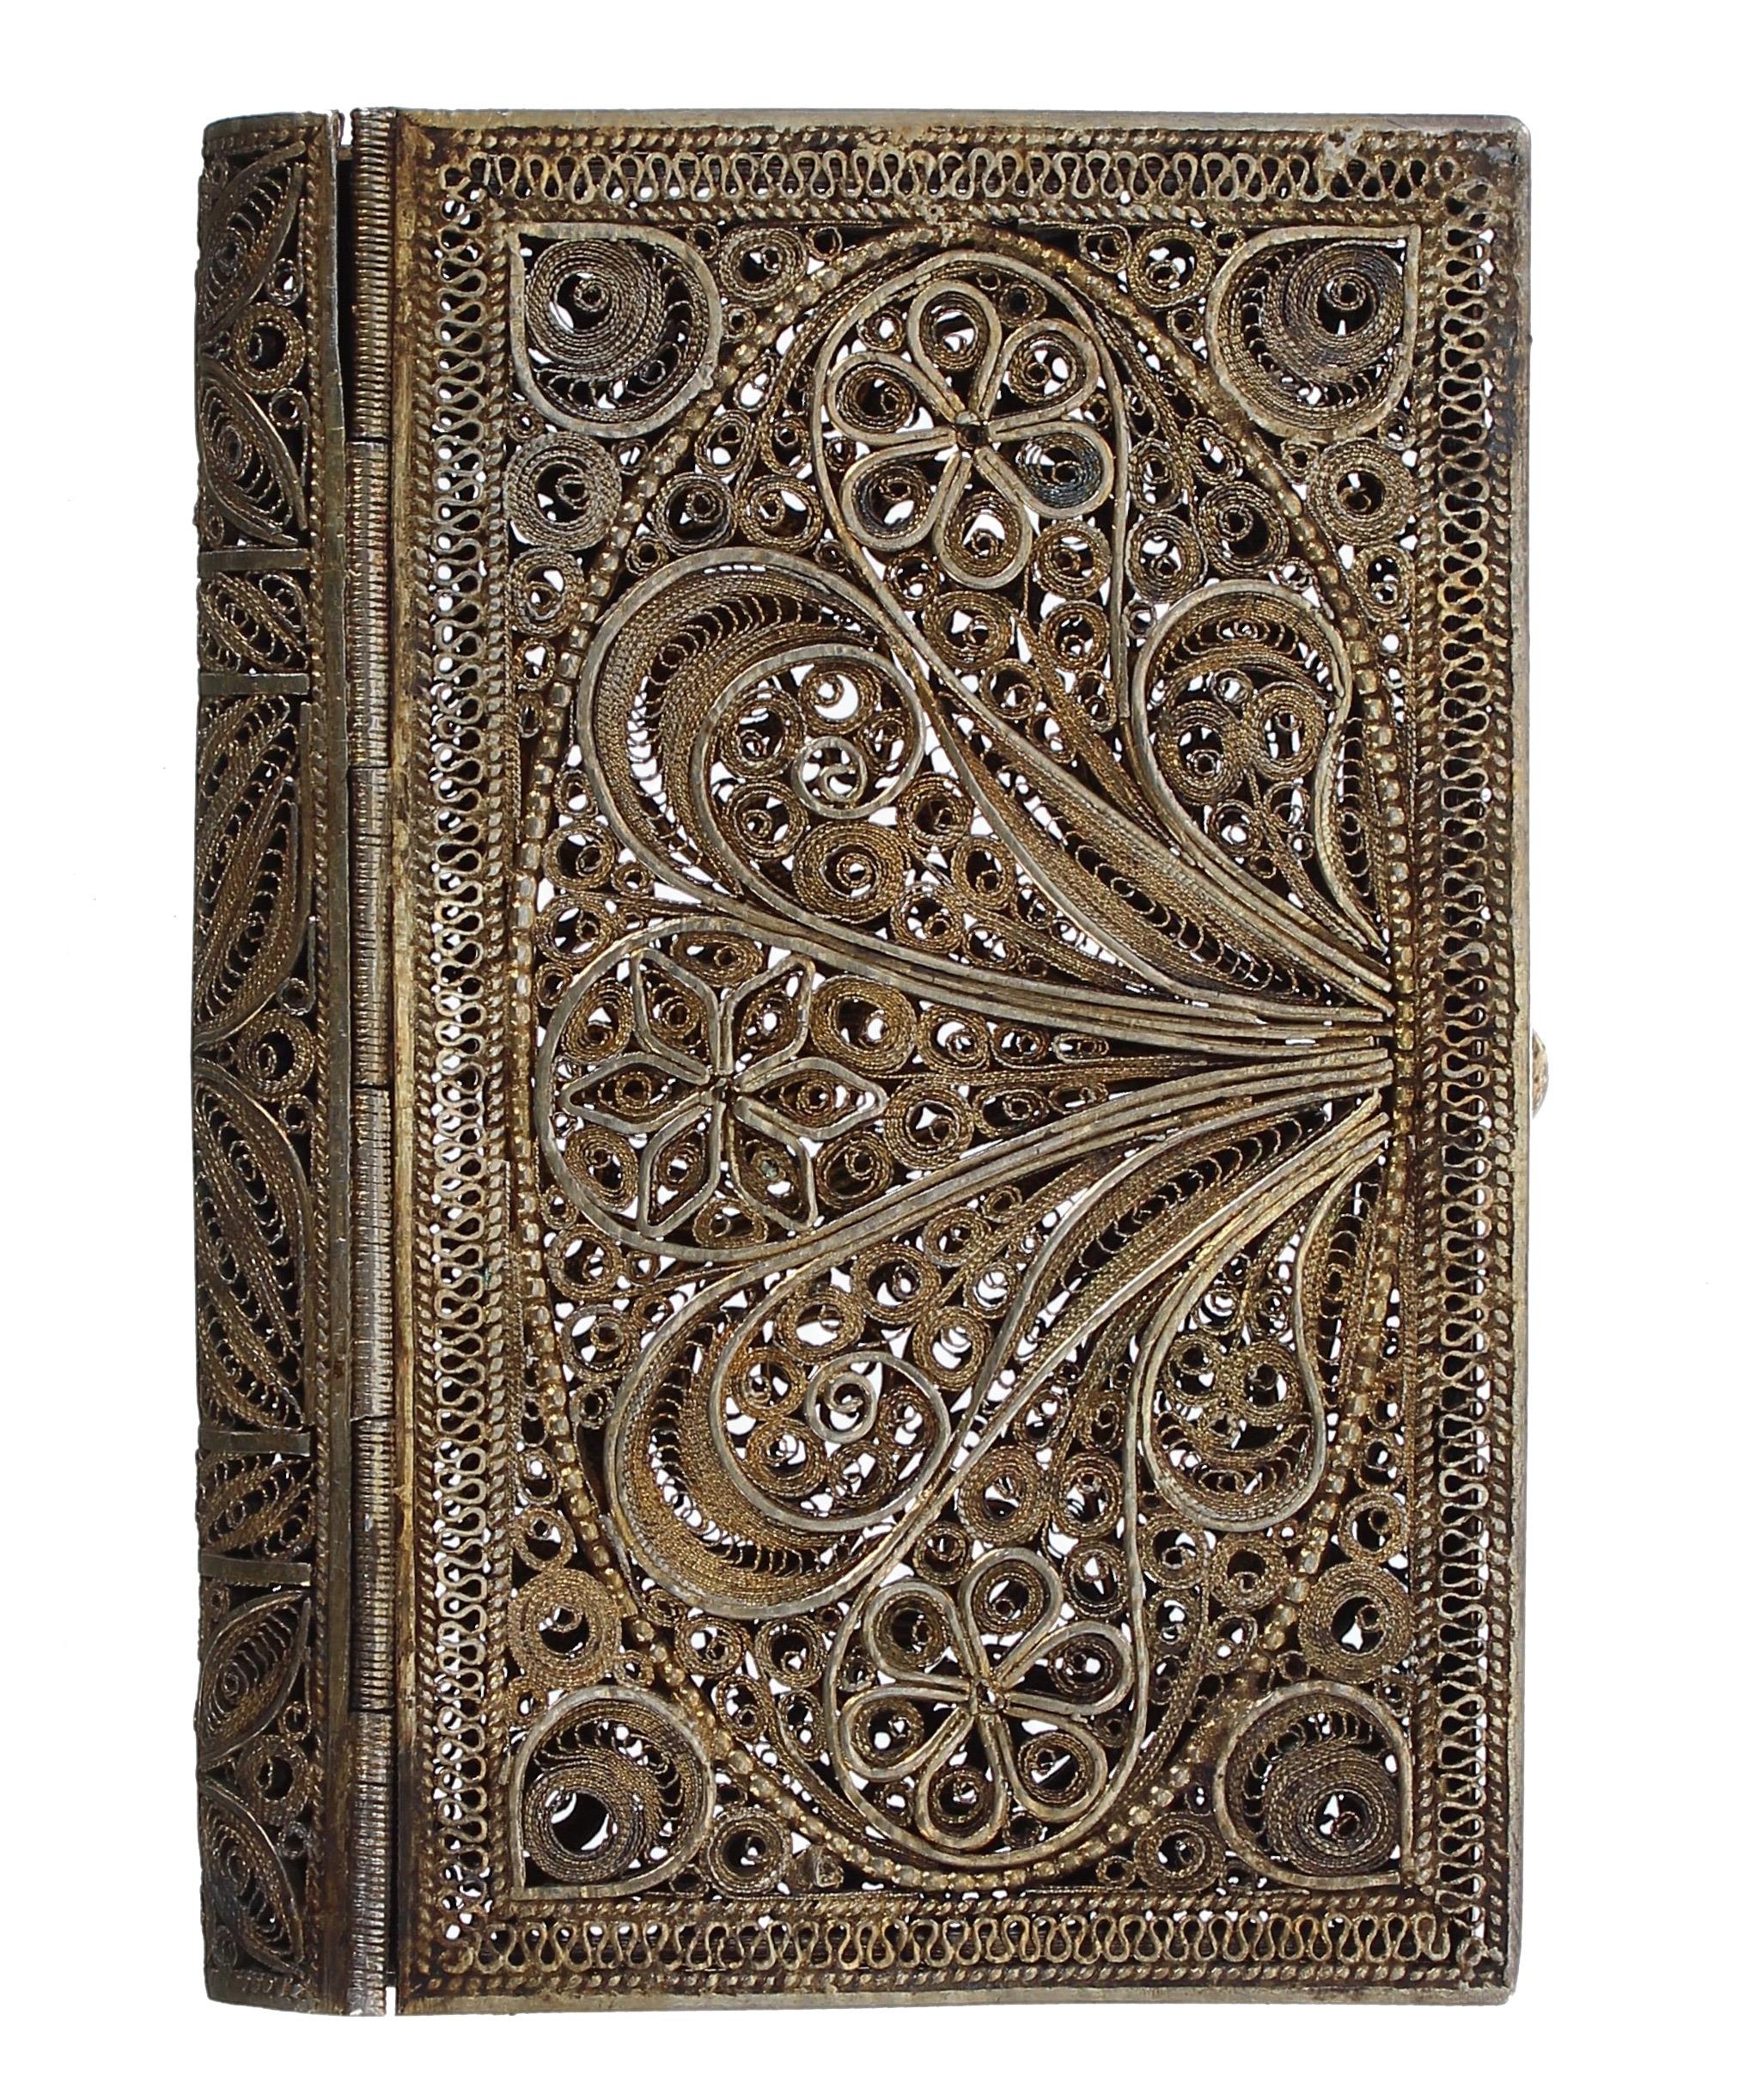 Ornate gilt metal filigree card case modelled as a book, 2.25" x 3.5"